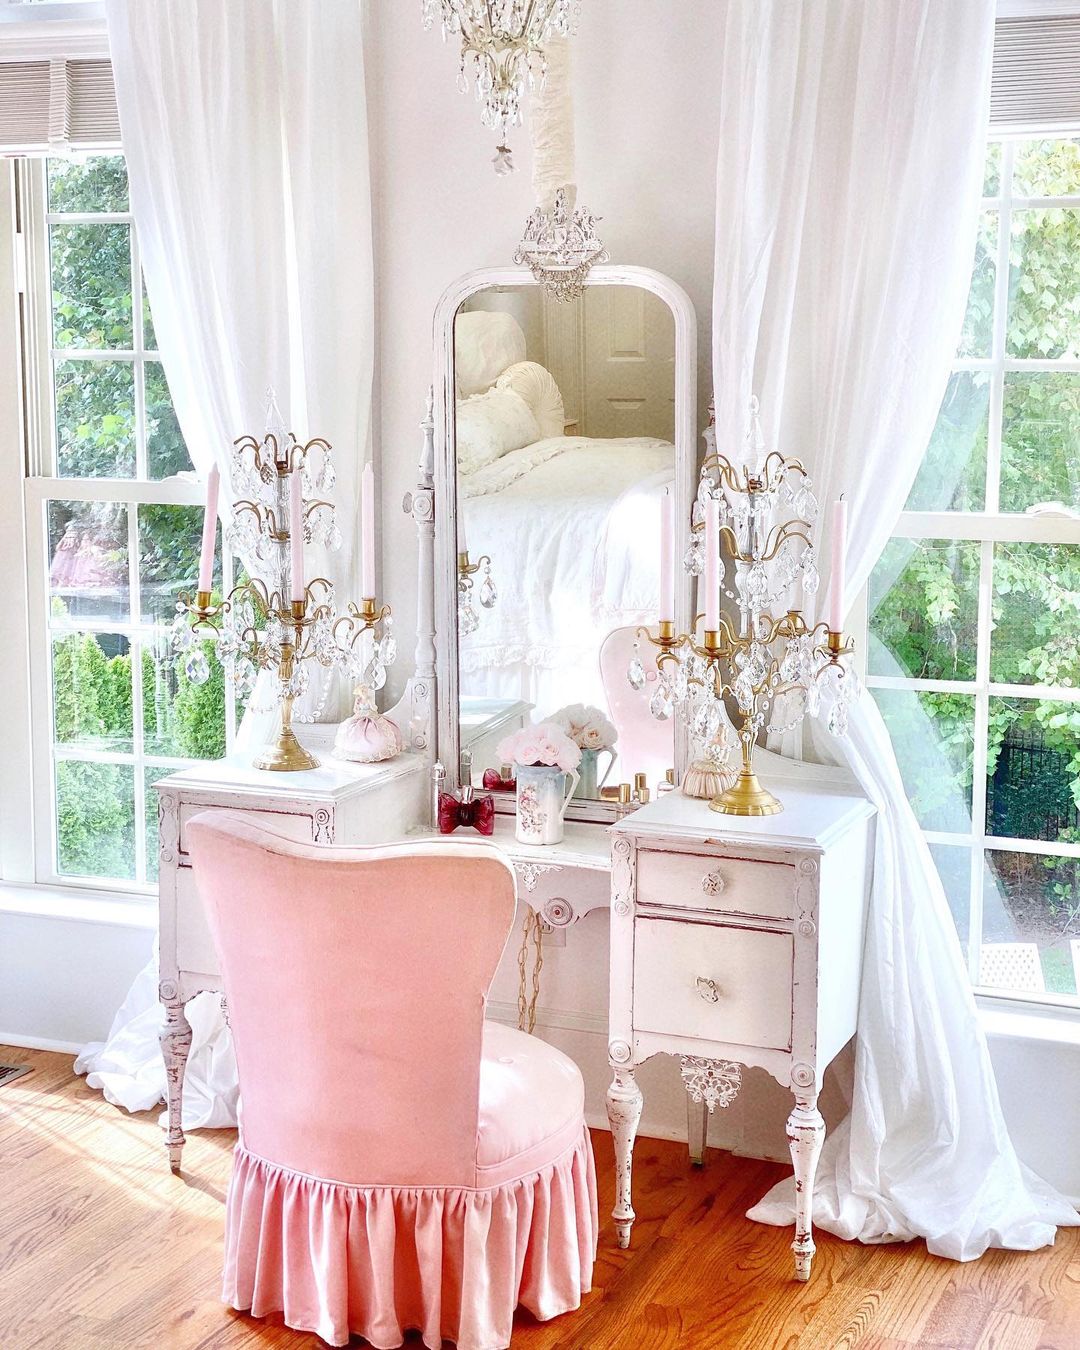 Elegant vanity with pink upholstered vanity chair. Photo by Instagram User @jenniferhayslip